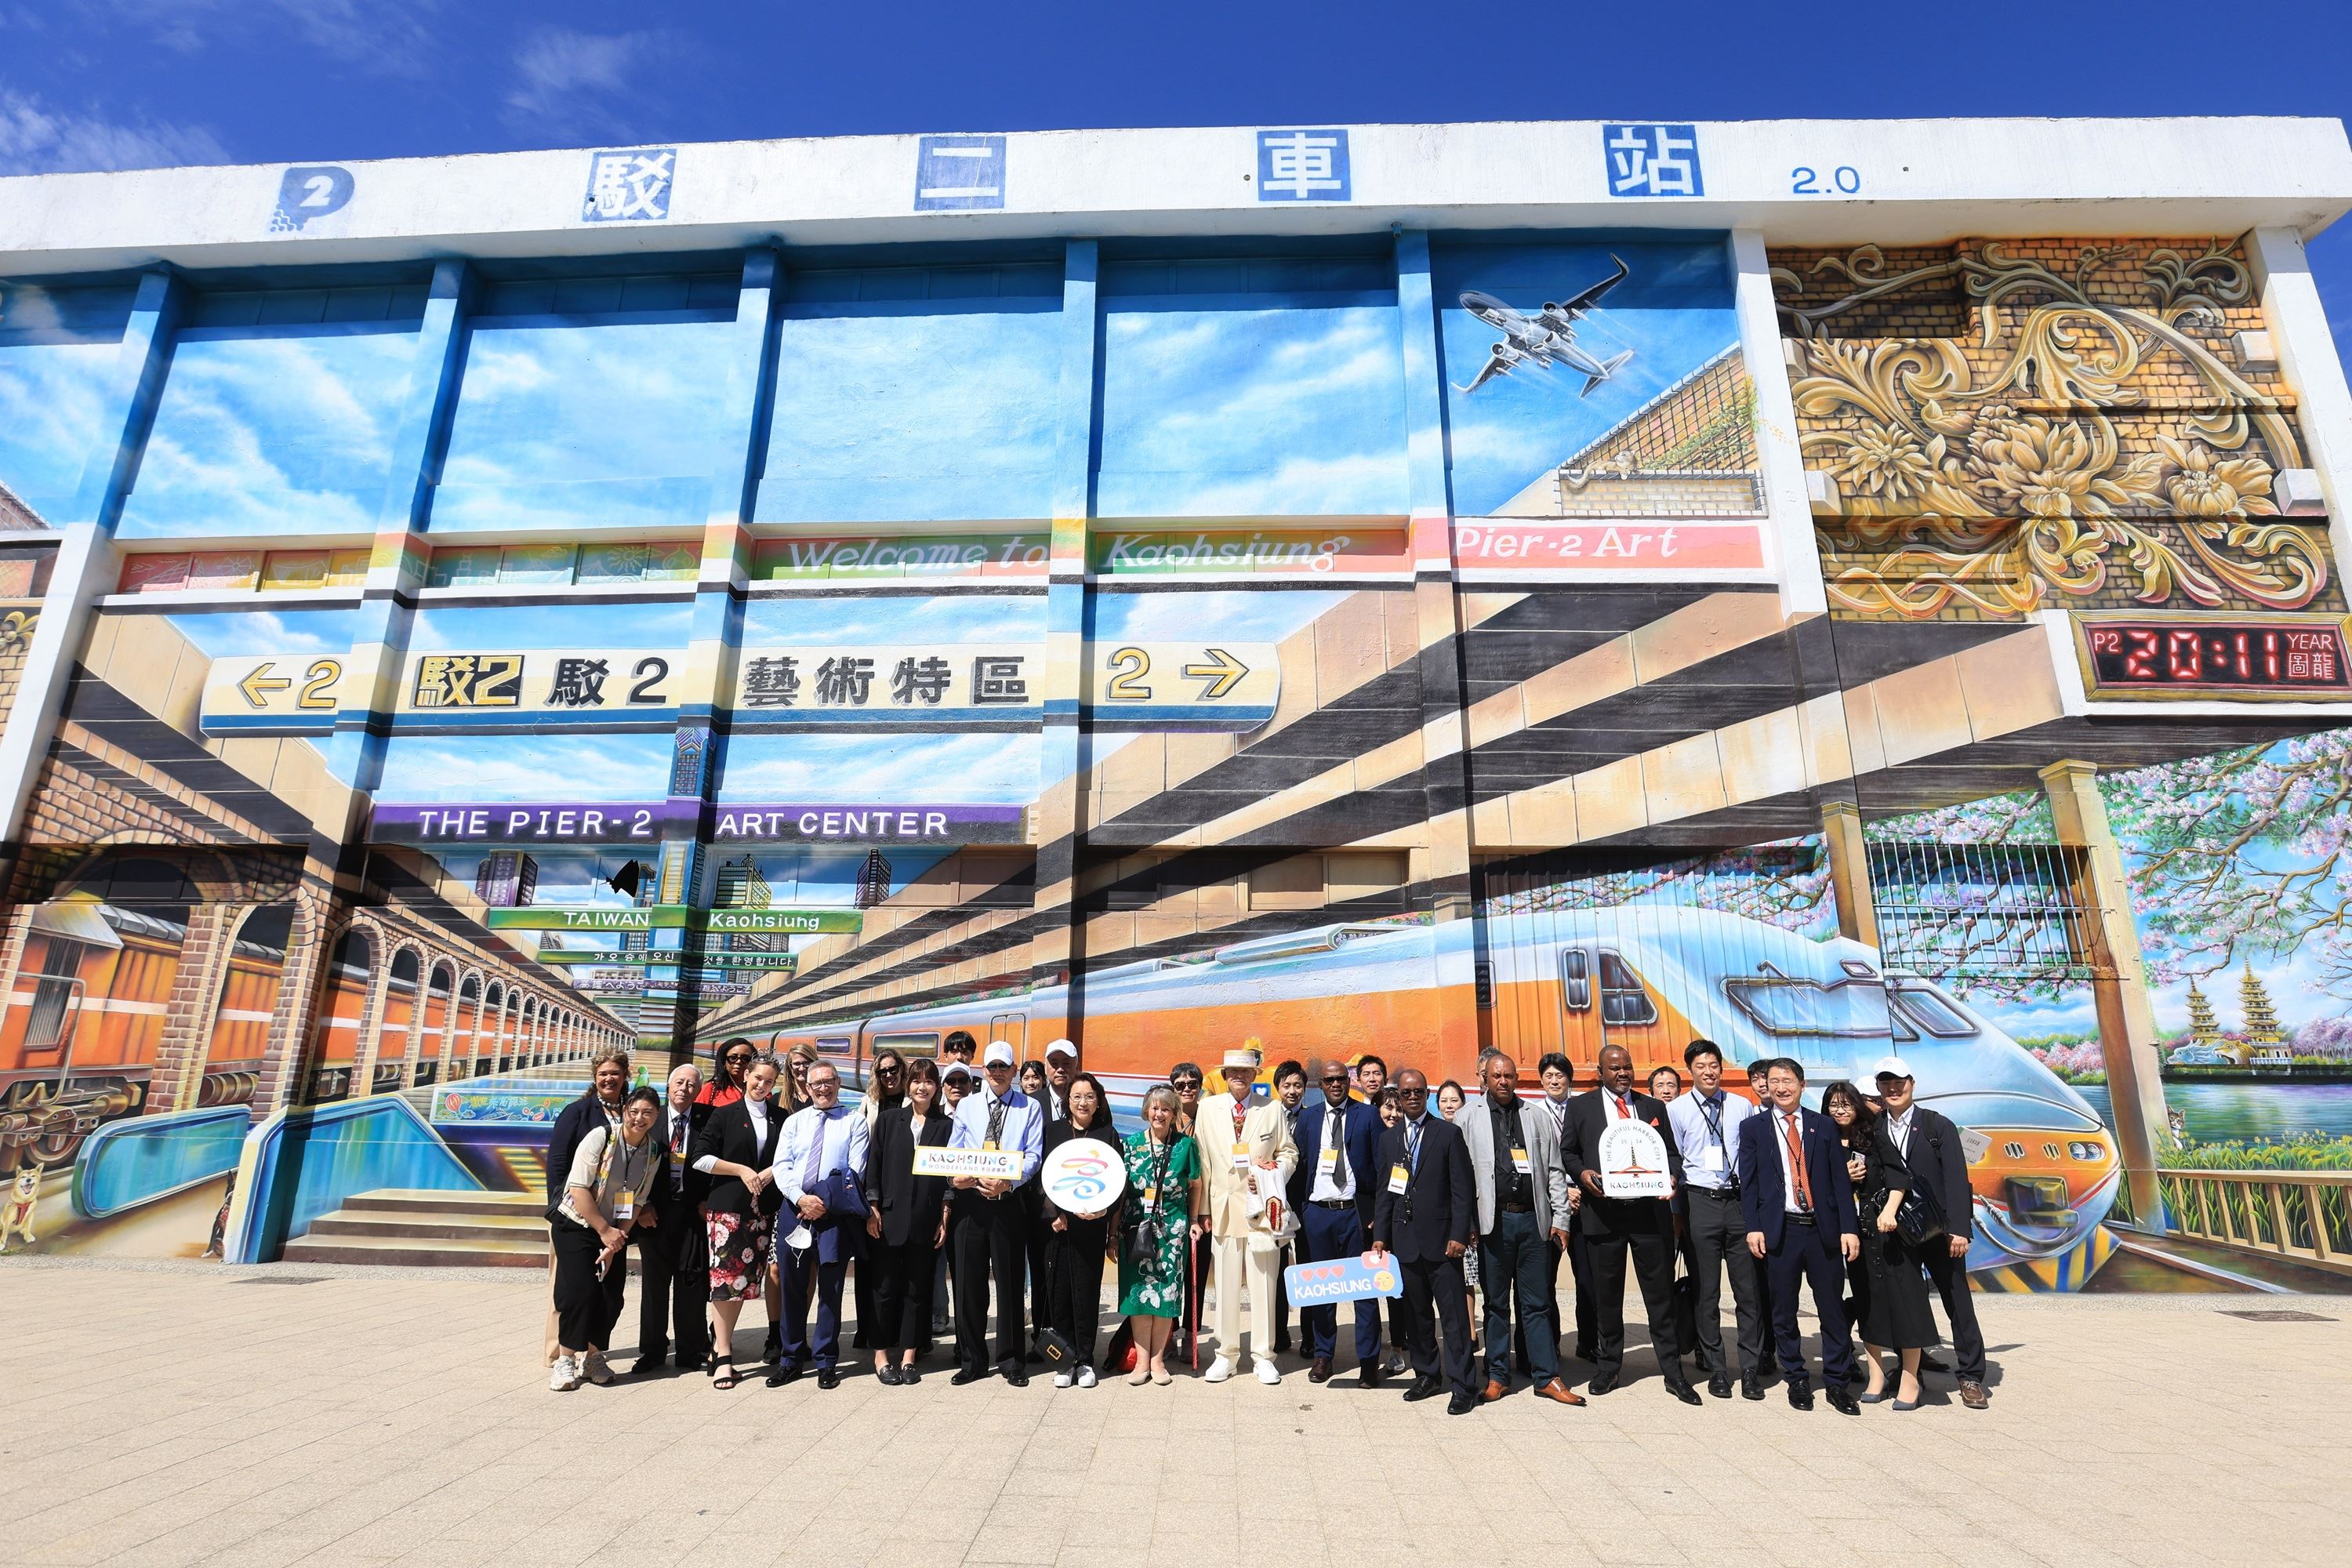 6.Representatives visited Pier-2 Art Center